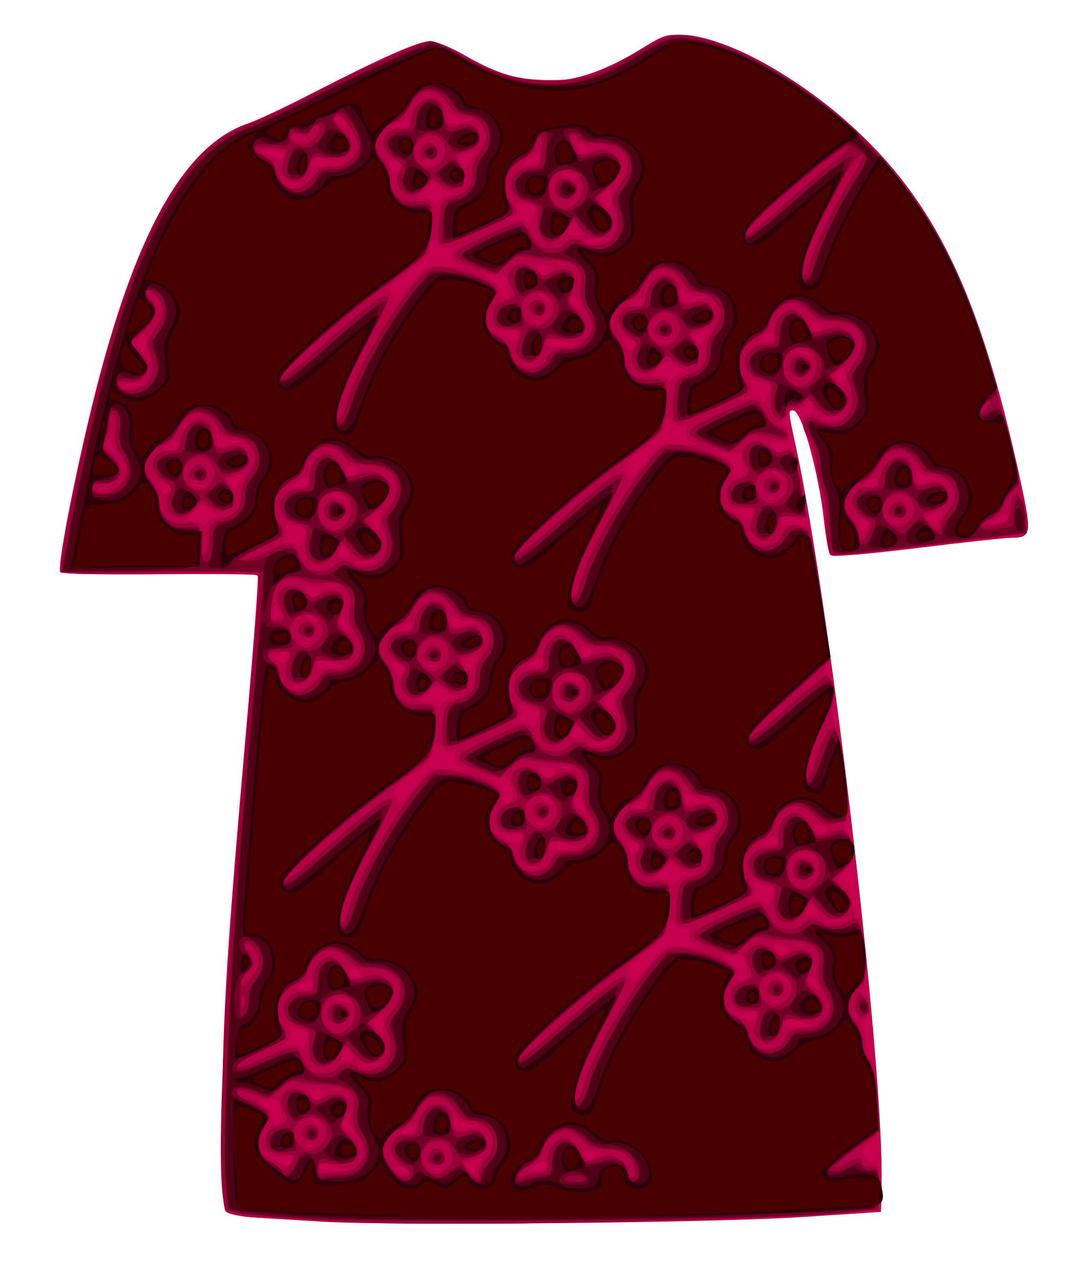 Tshirt-plum-pattern 02 png transparent